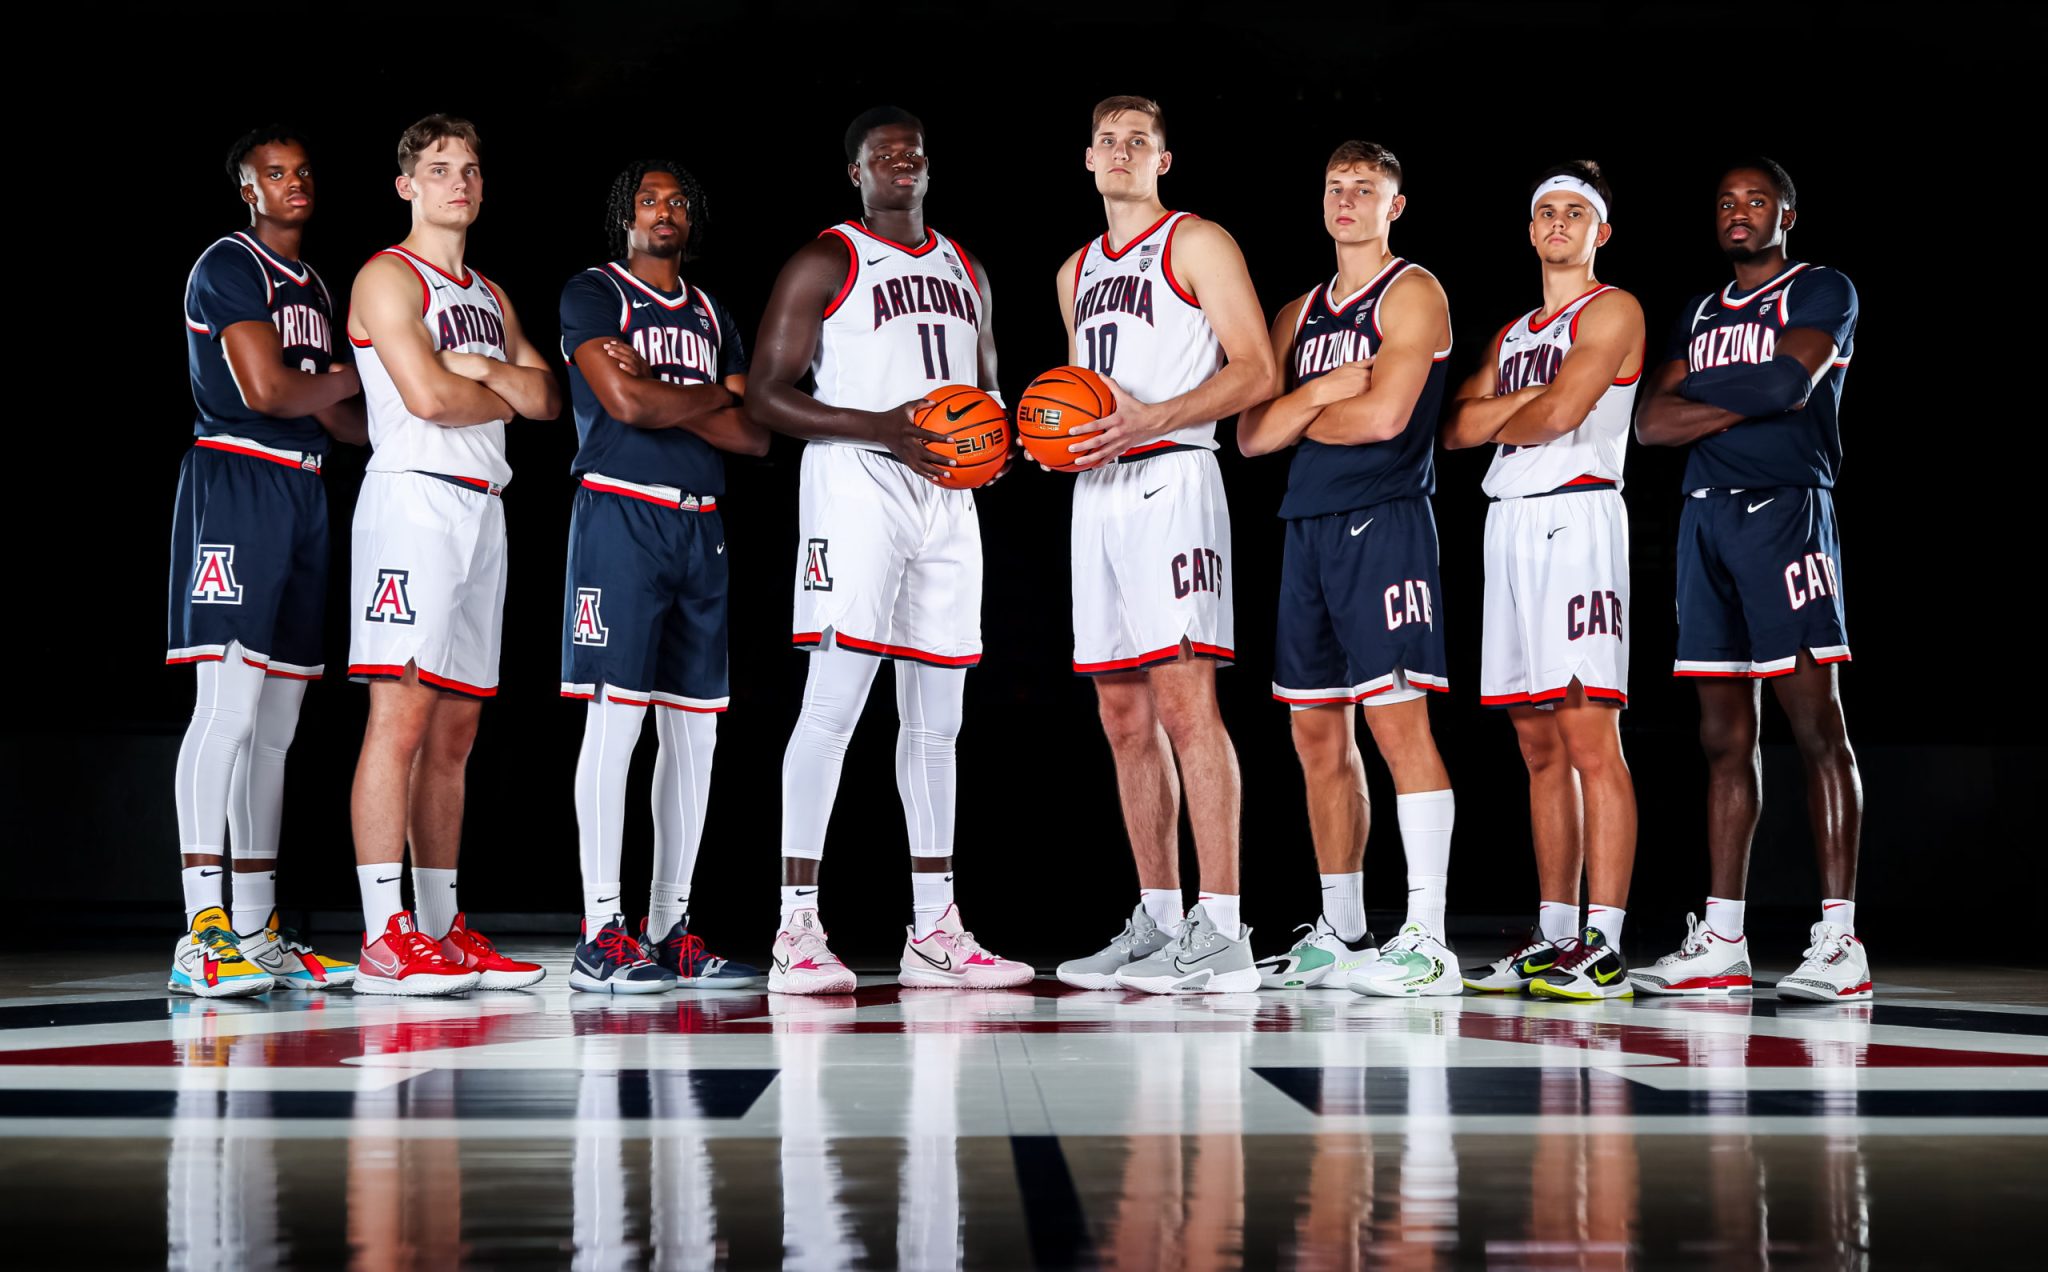 Nike, NBA reveal new uniforms for next season - Sports Illustrated